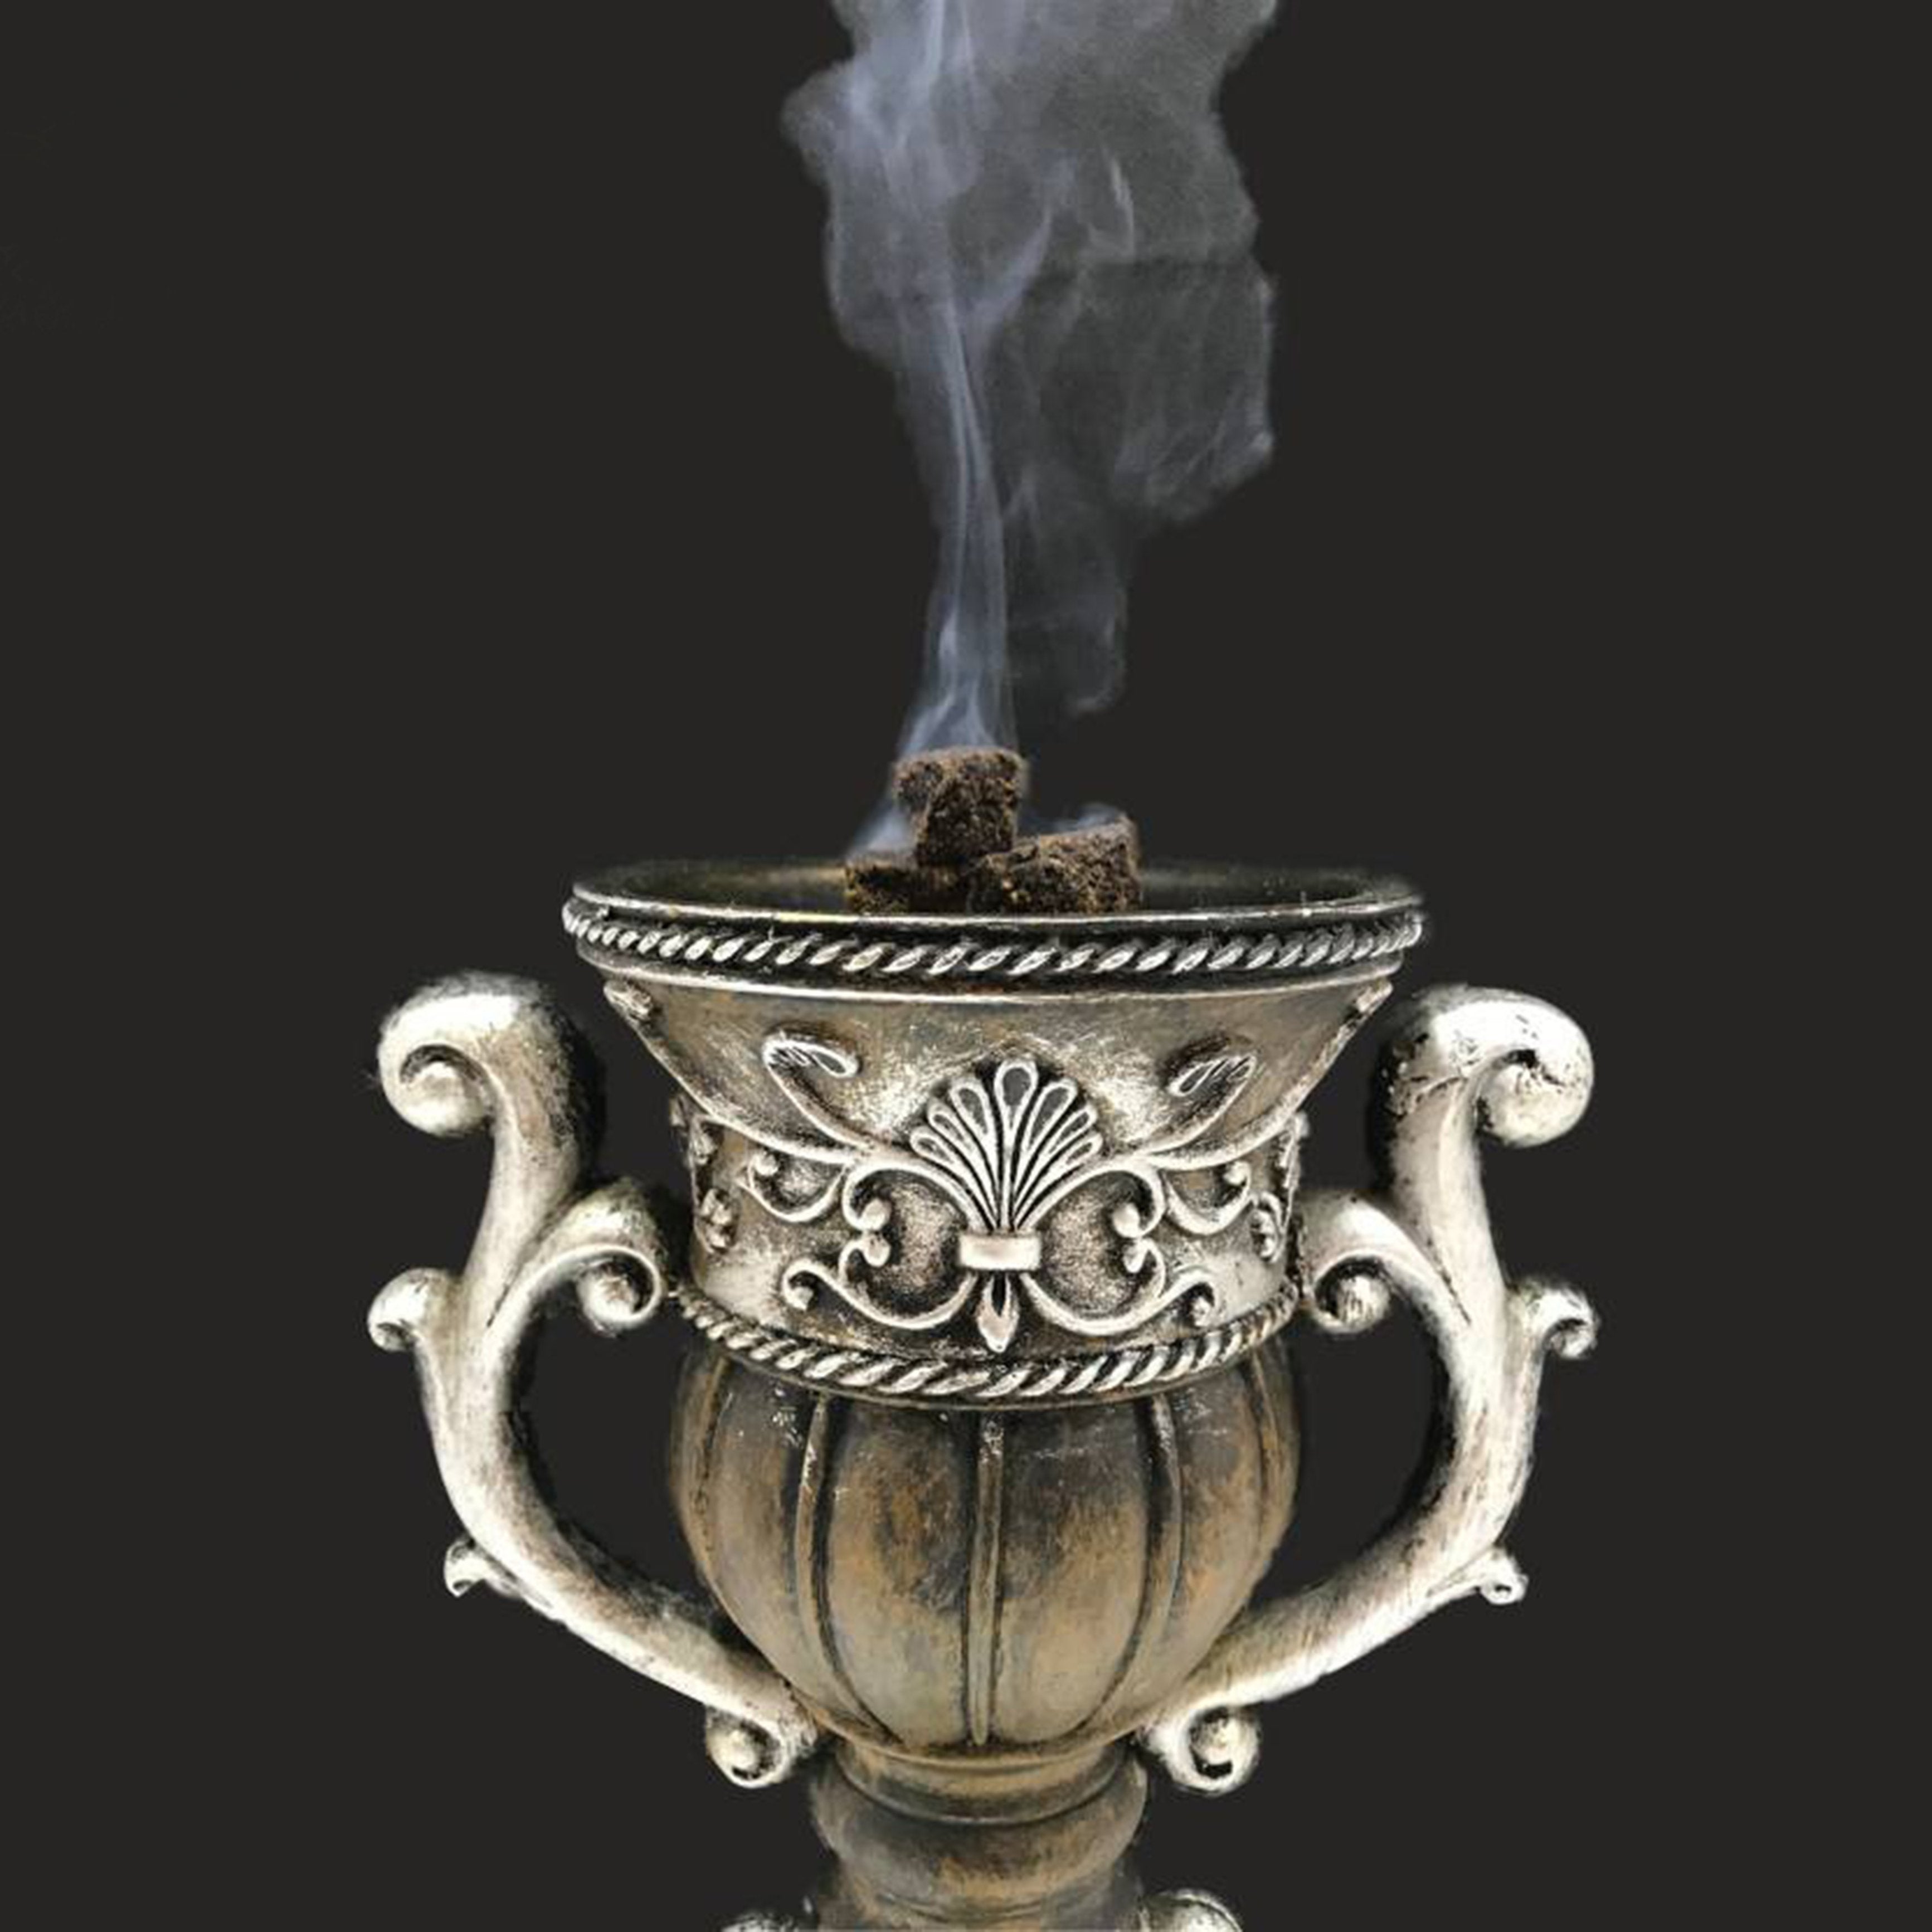 Alif Bukhoor Oudh Al Firdous & Al Saeed Incense Home Fragrance Combo Pack Of 2 x 50g